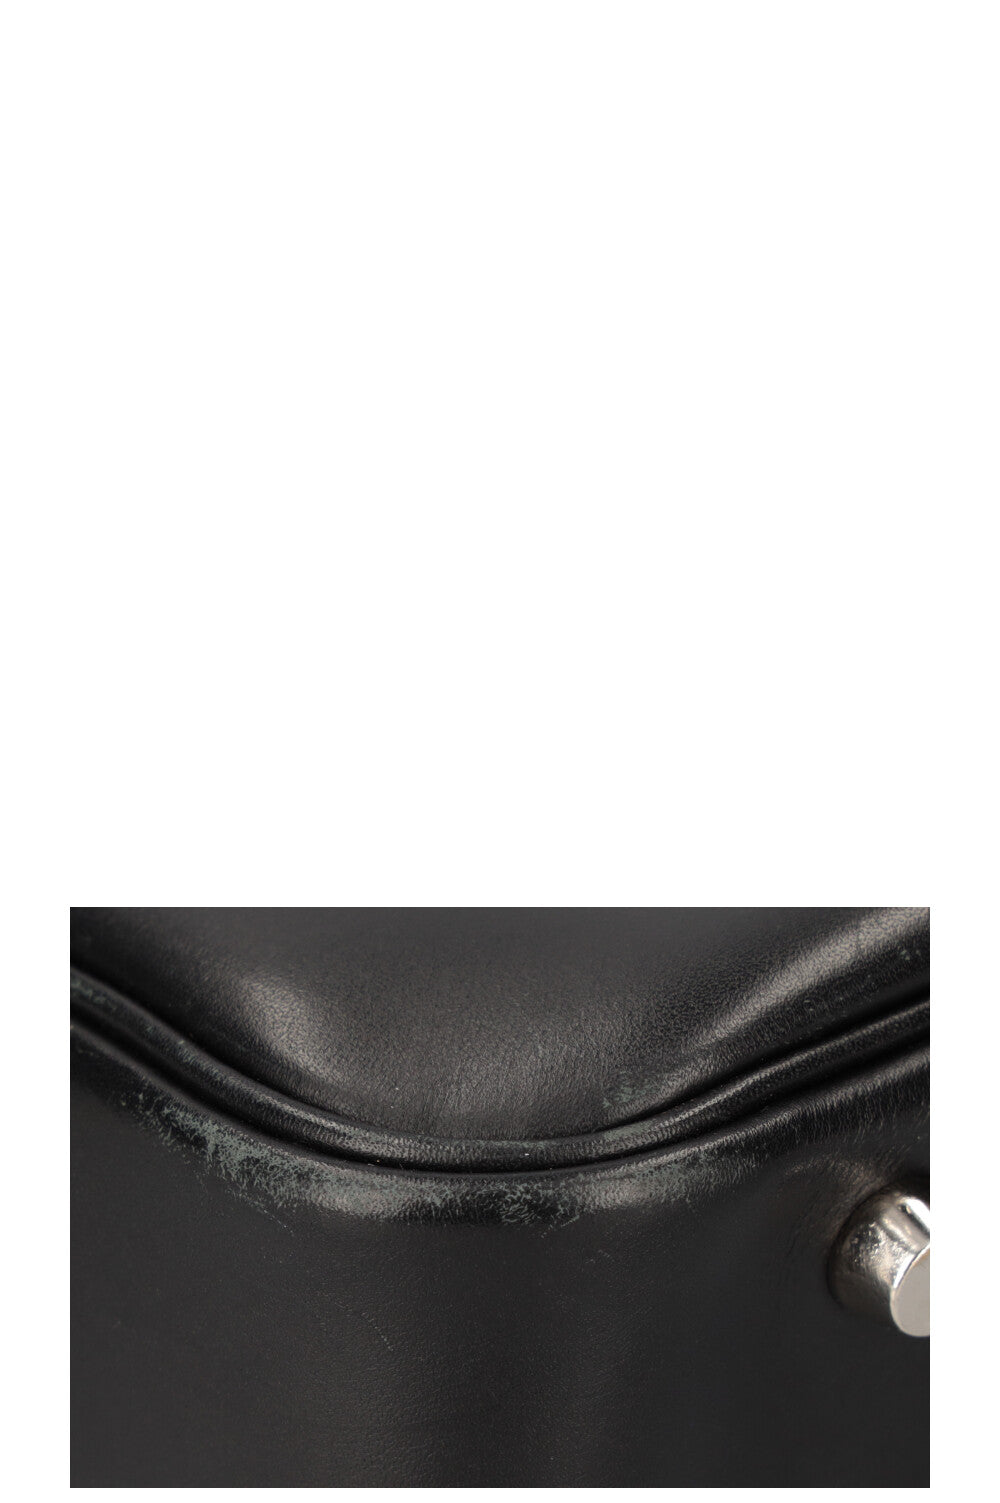 HERMÈS Plume Bag 32 Swift Leather Black